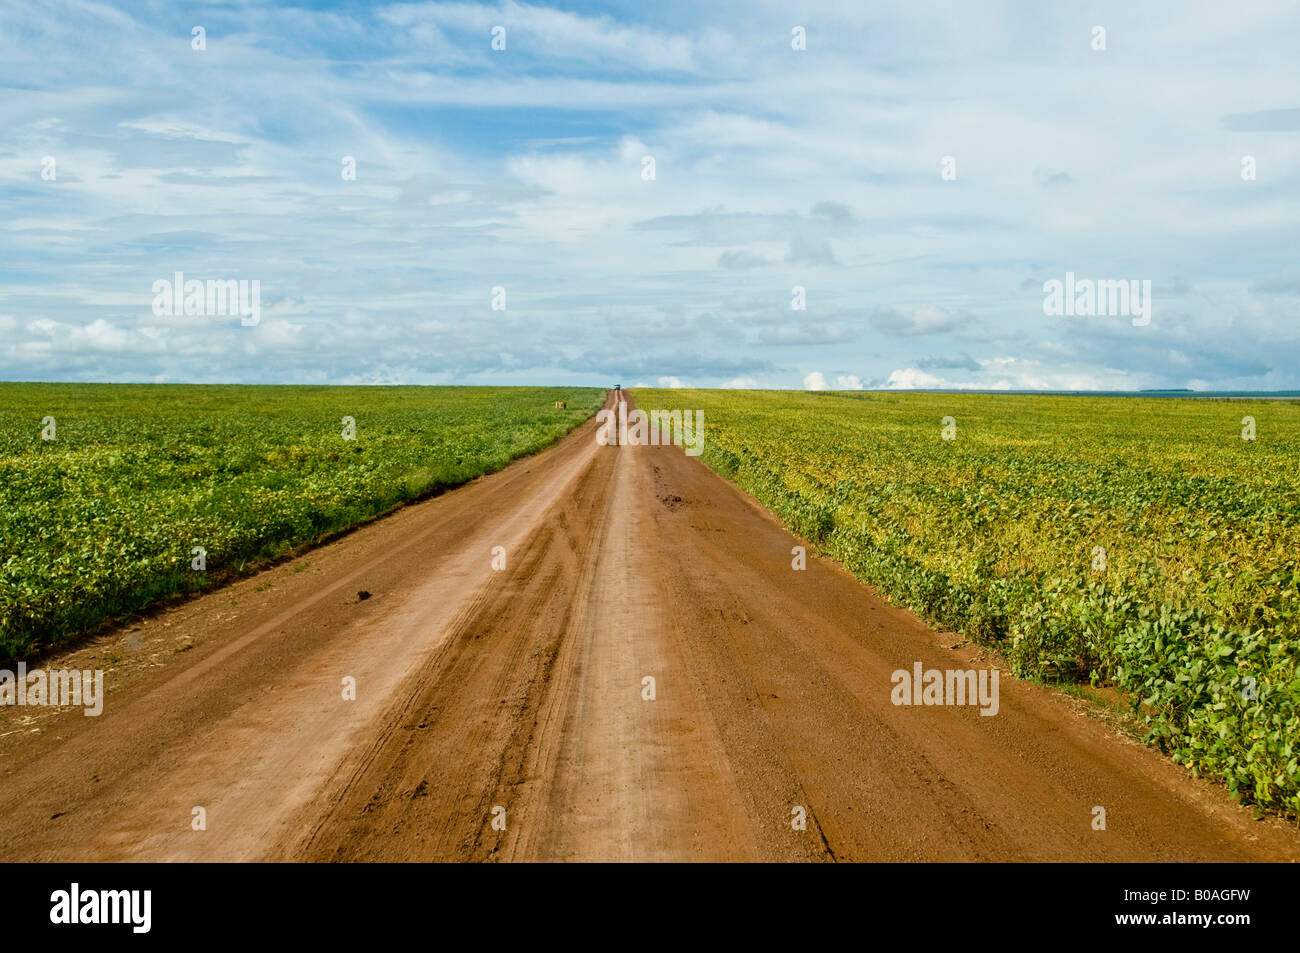 Road cuts across soy plantation at Fartura Farm 200 km from Cuiab Mato Grosso Brazil Stock Photo